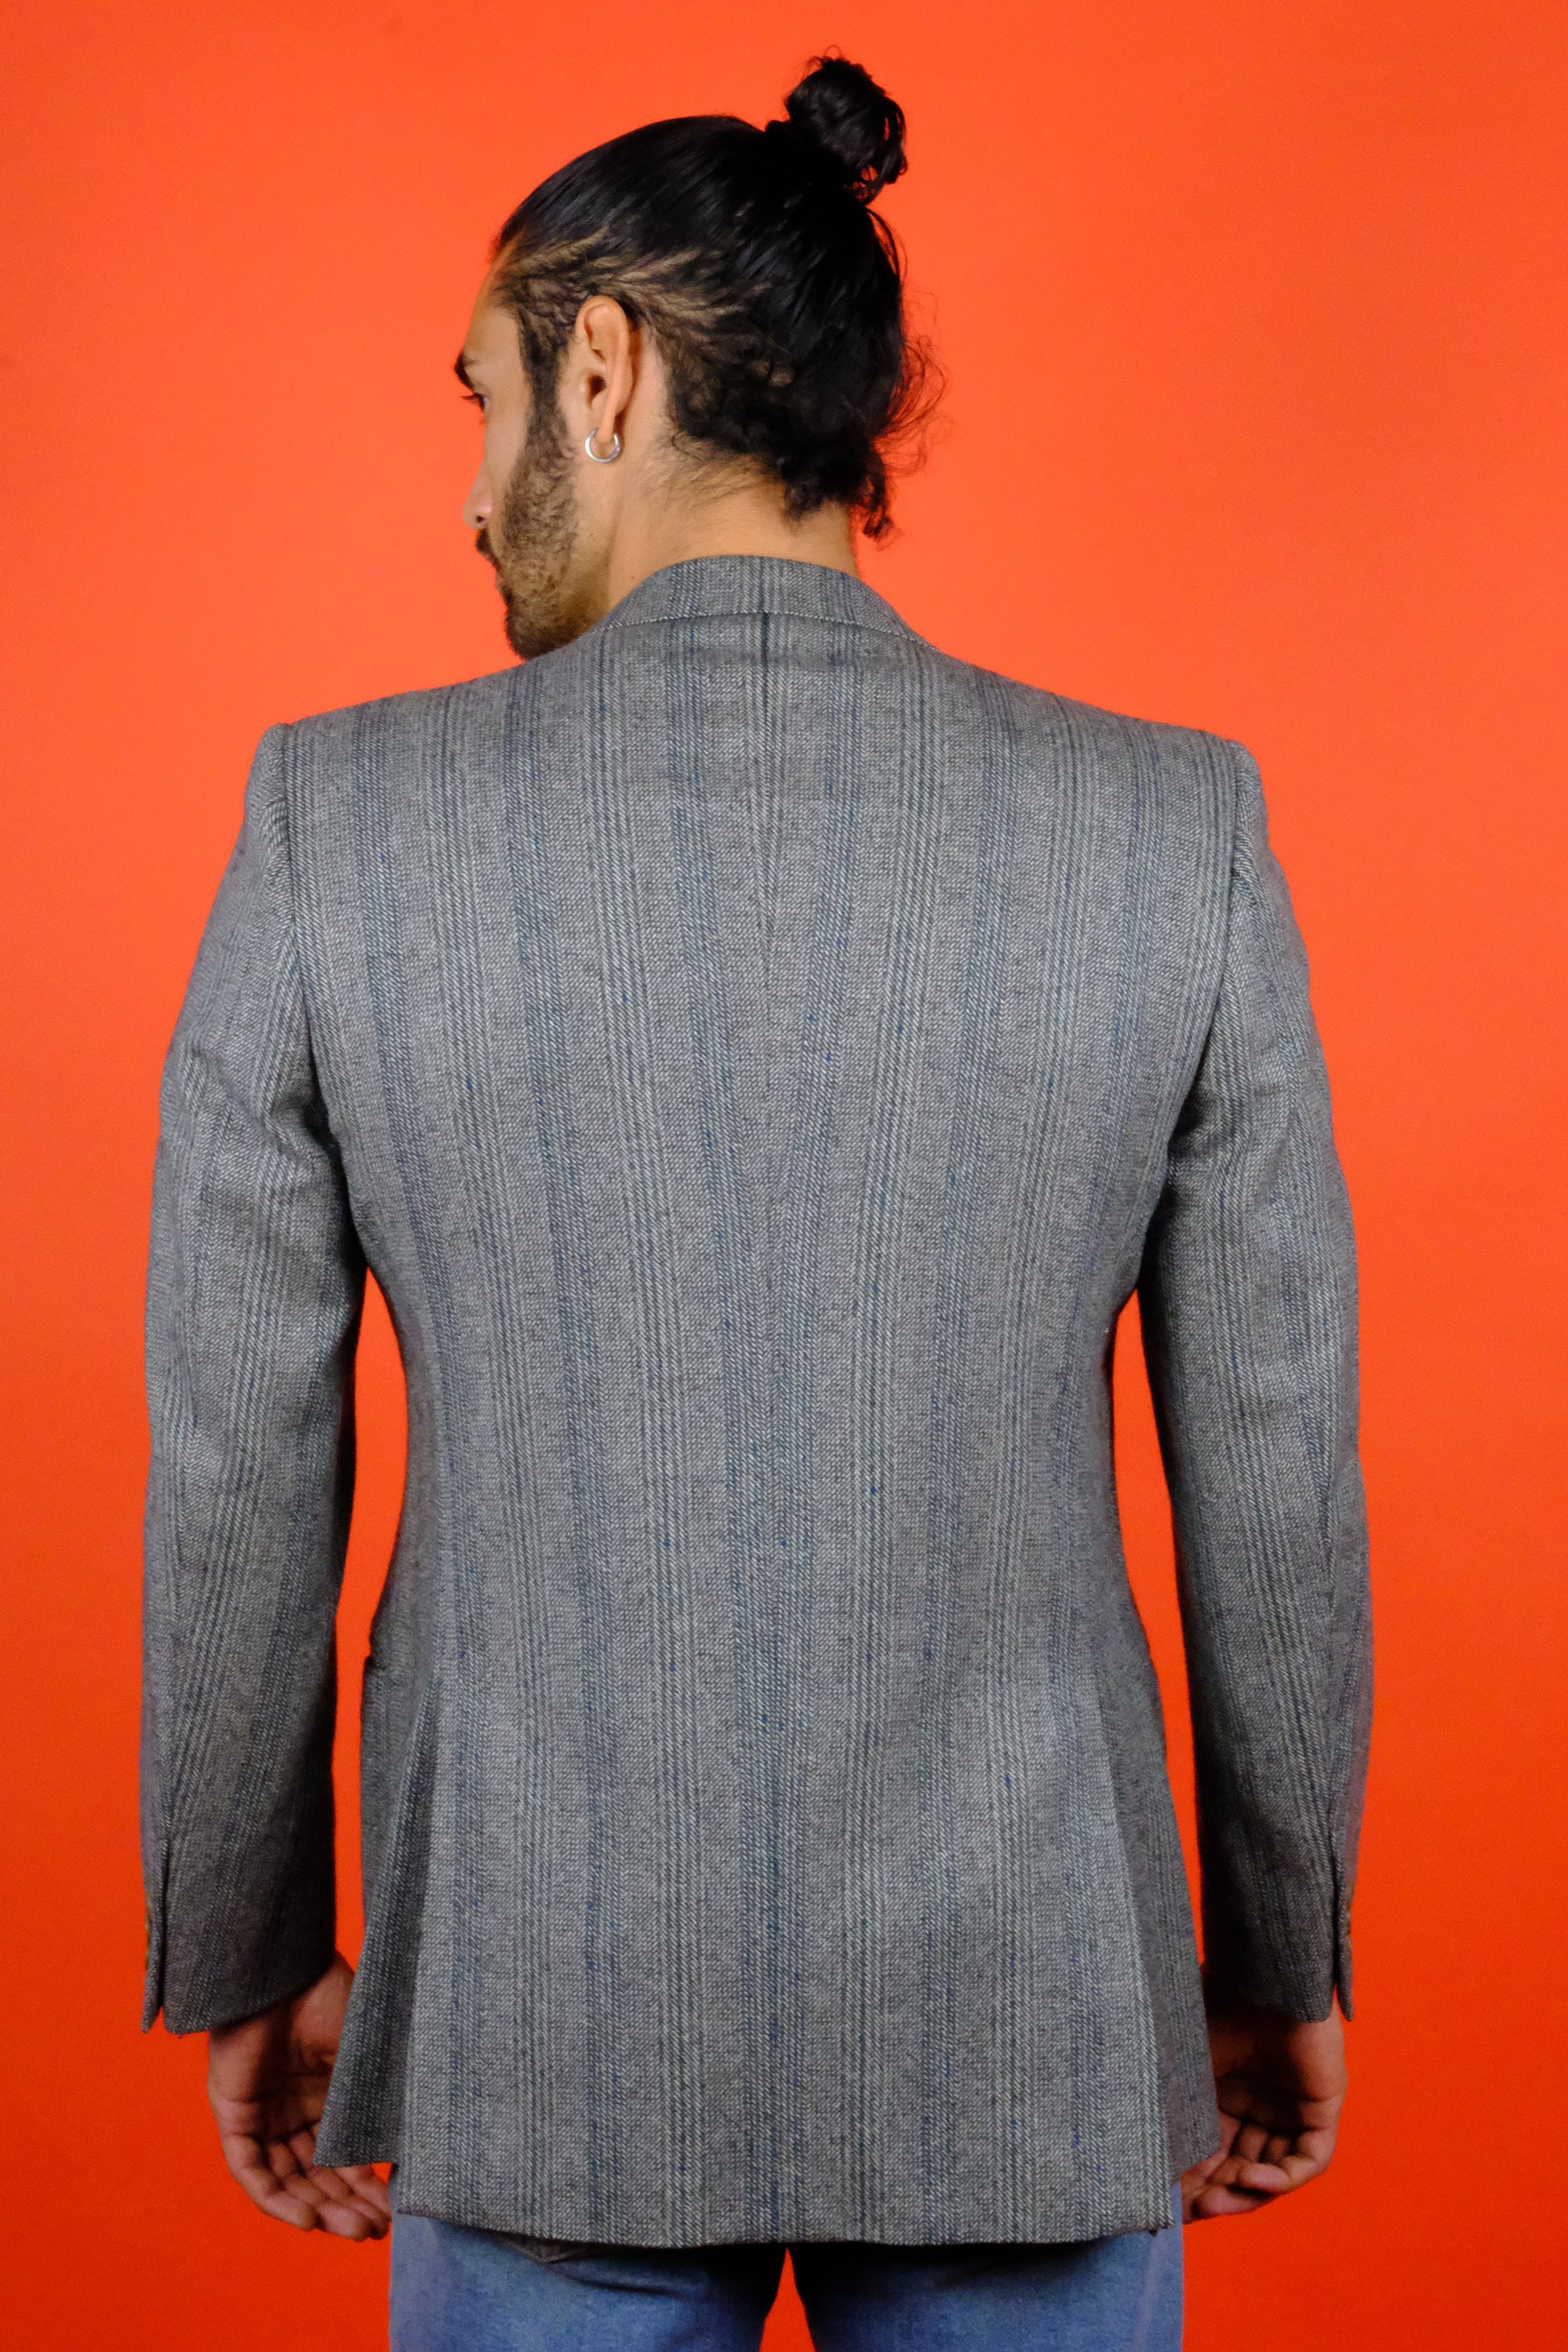 Aquascutum of London Wool Suit Jacket - vintage clothing clochard92.com